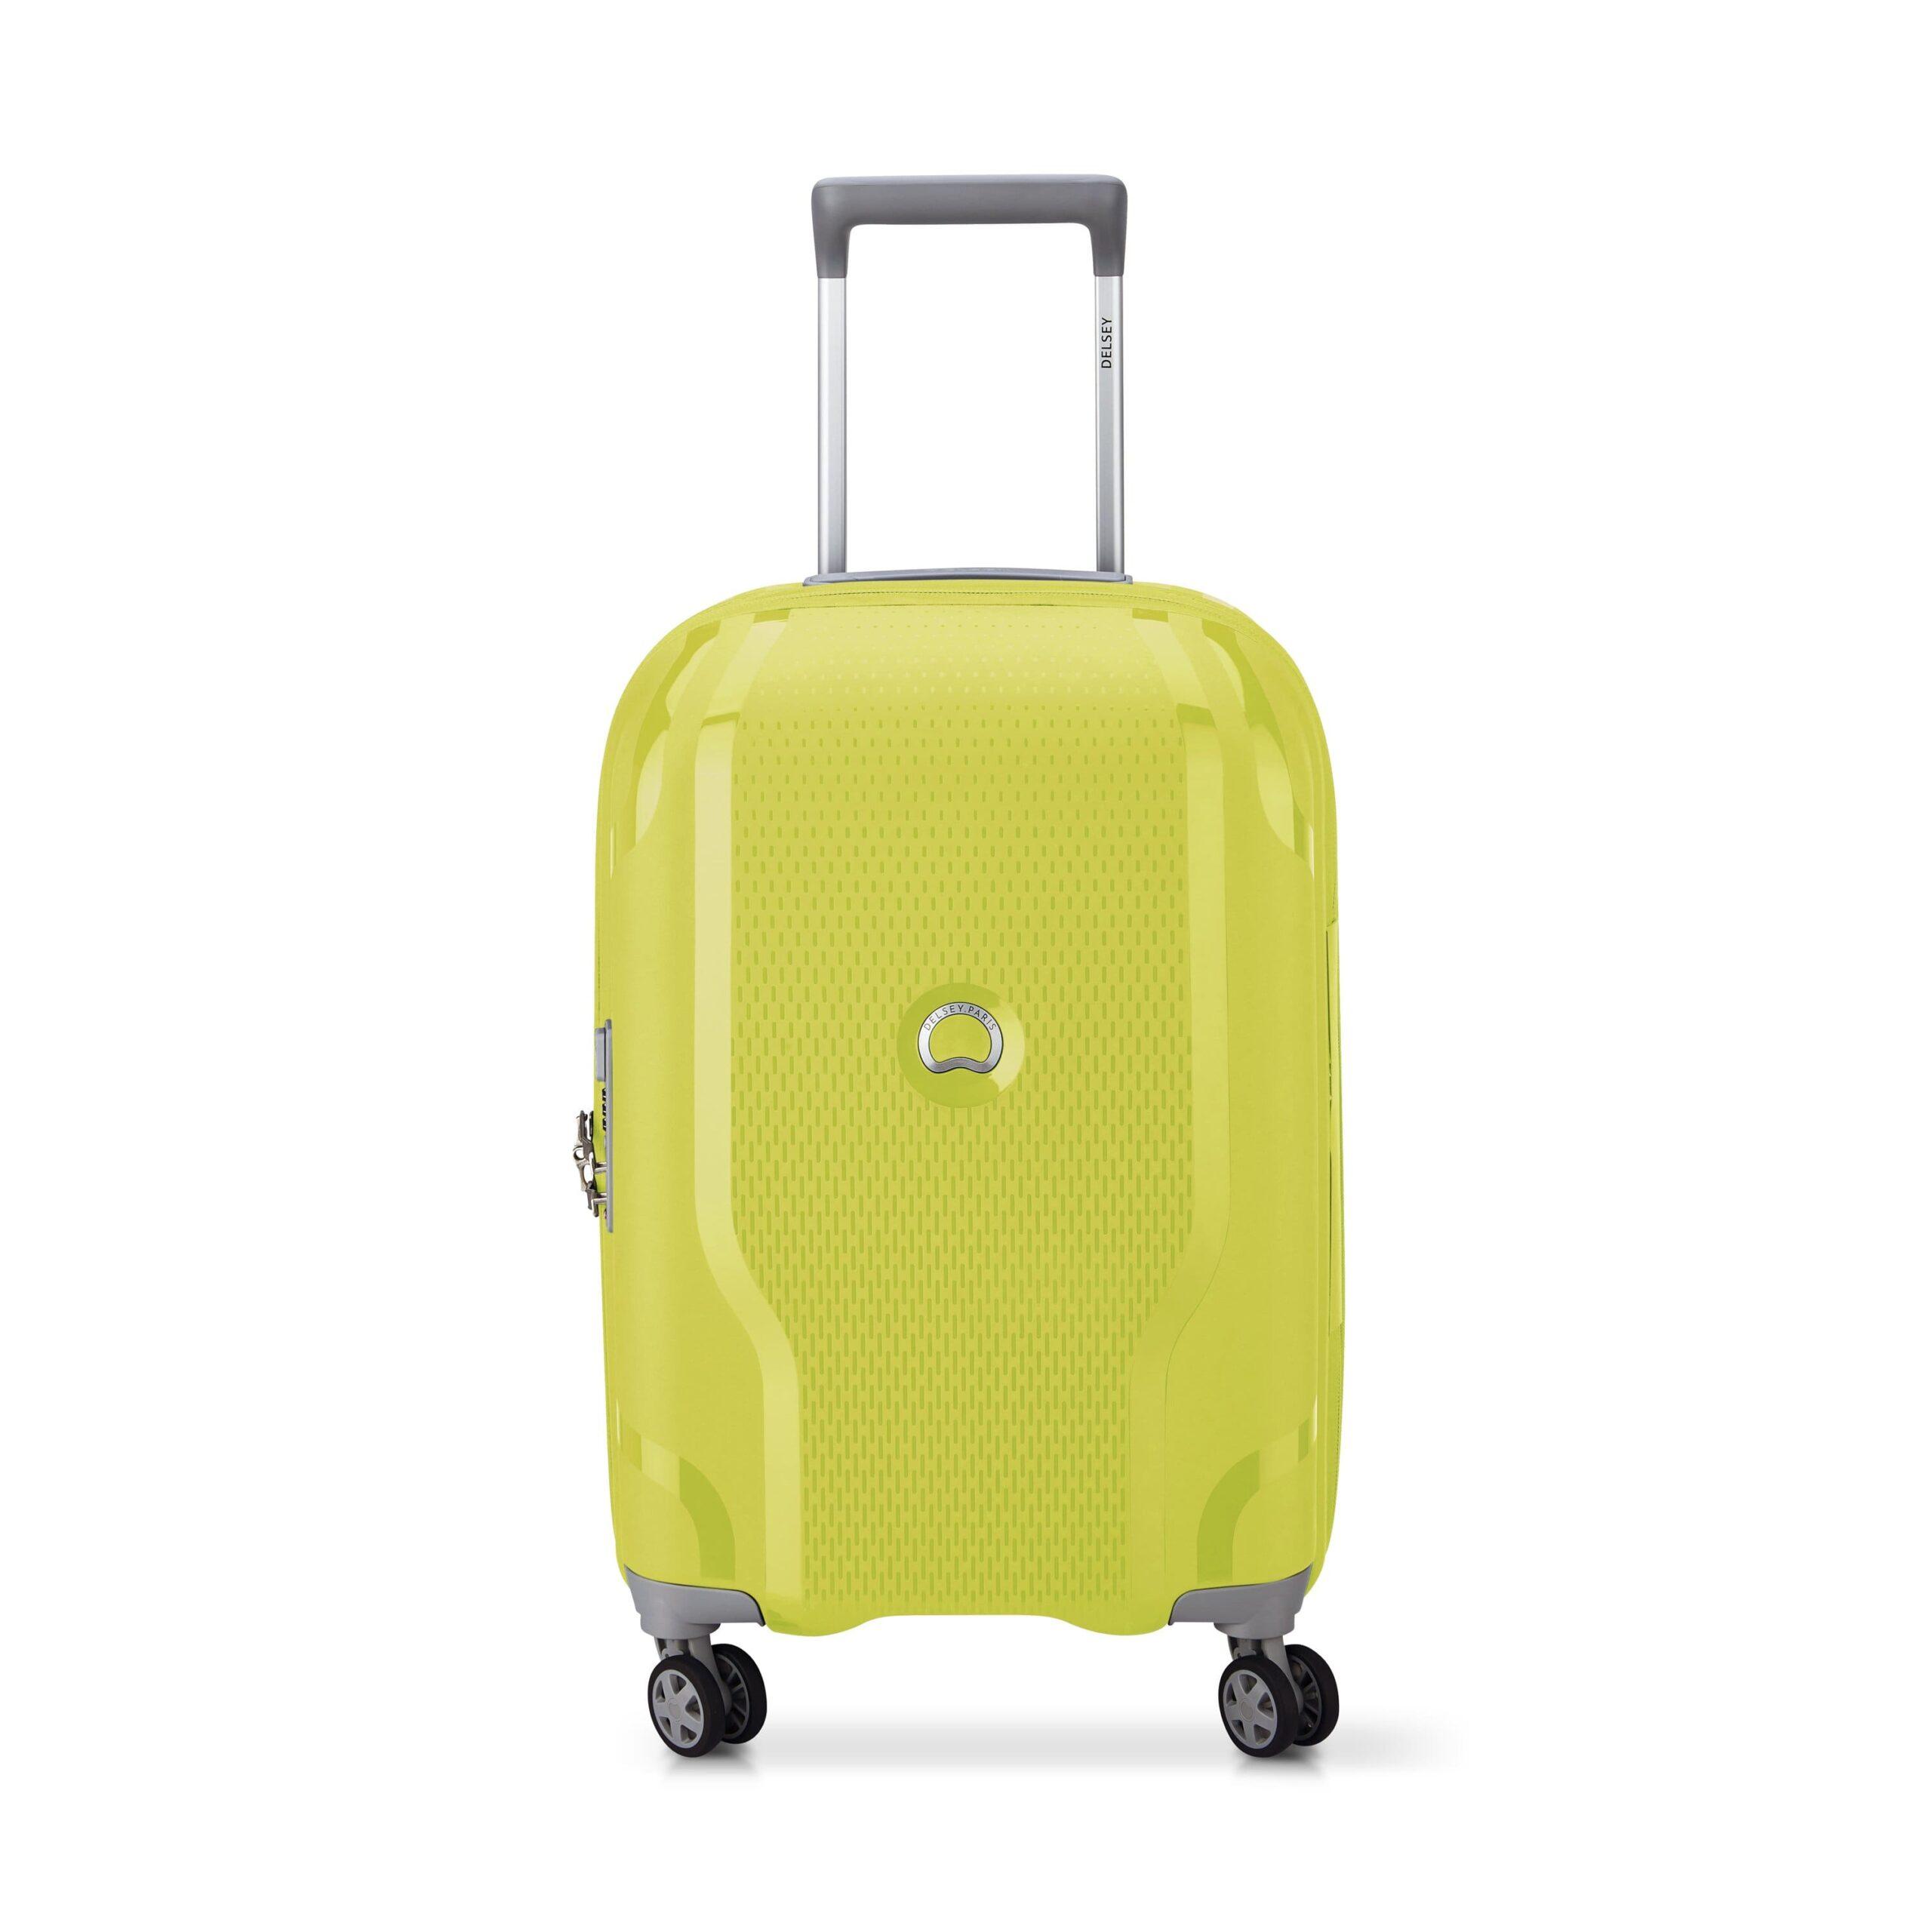 Delsey Clavel 55cm Hardcase 4 Double Wheel Expandable Cabin Luggage Trolley Lemon - 00384580115